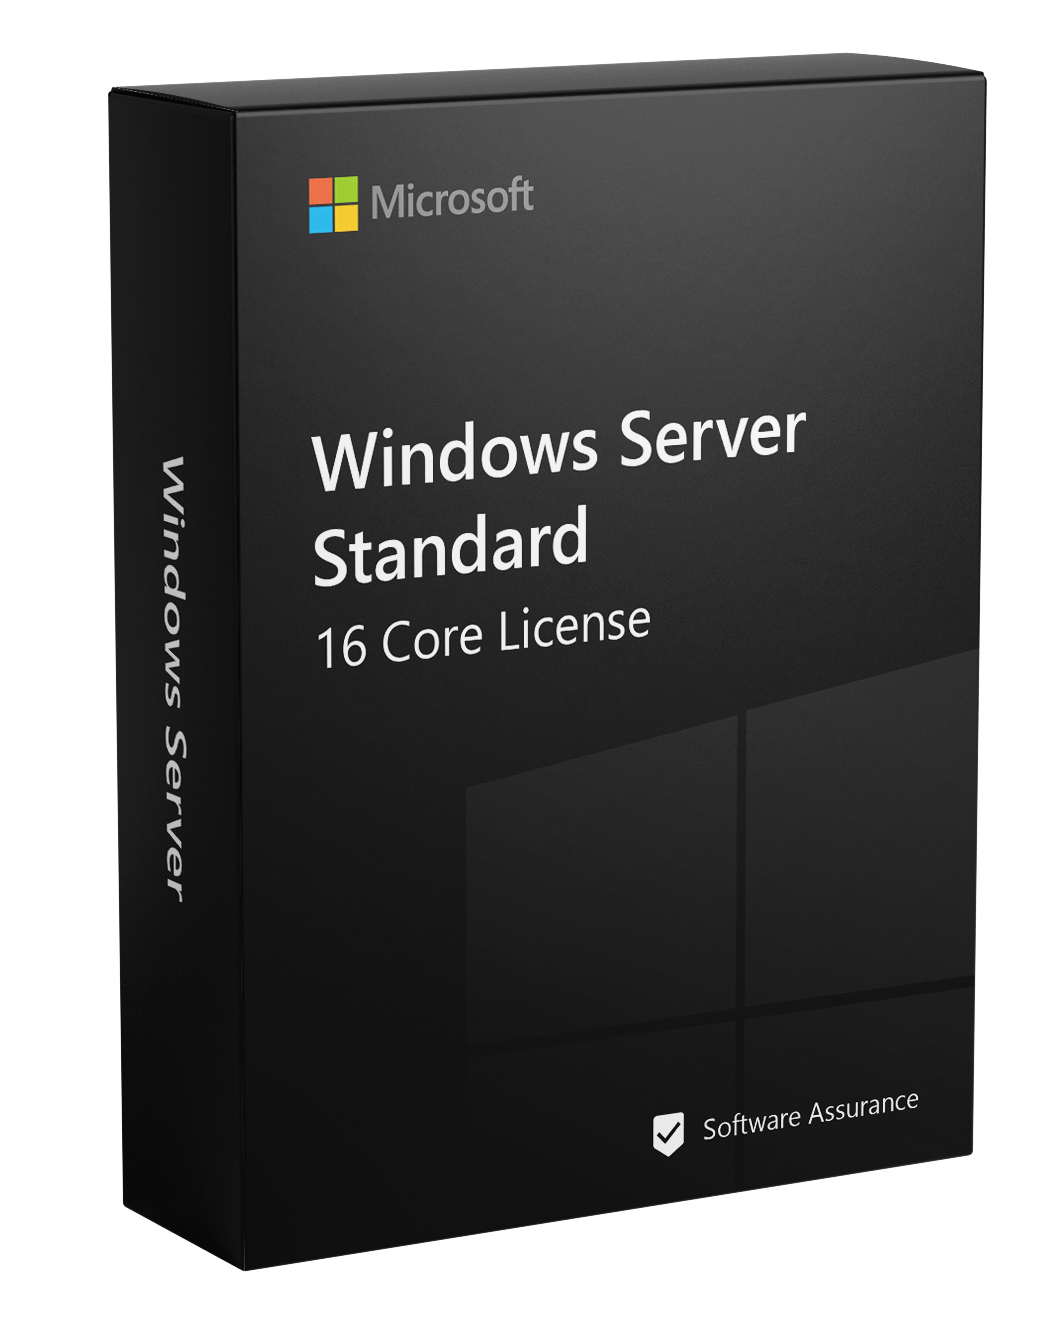 Microsoft Software Microsoft Windows Server Standard - 16 Core License (w/ Software Assurance)